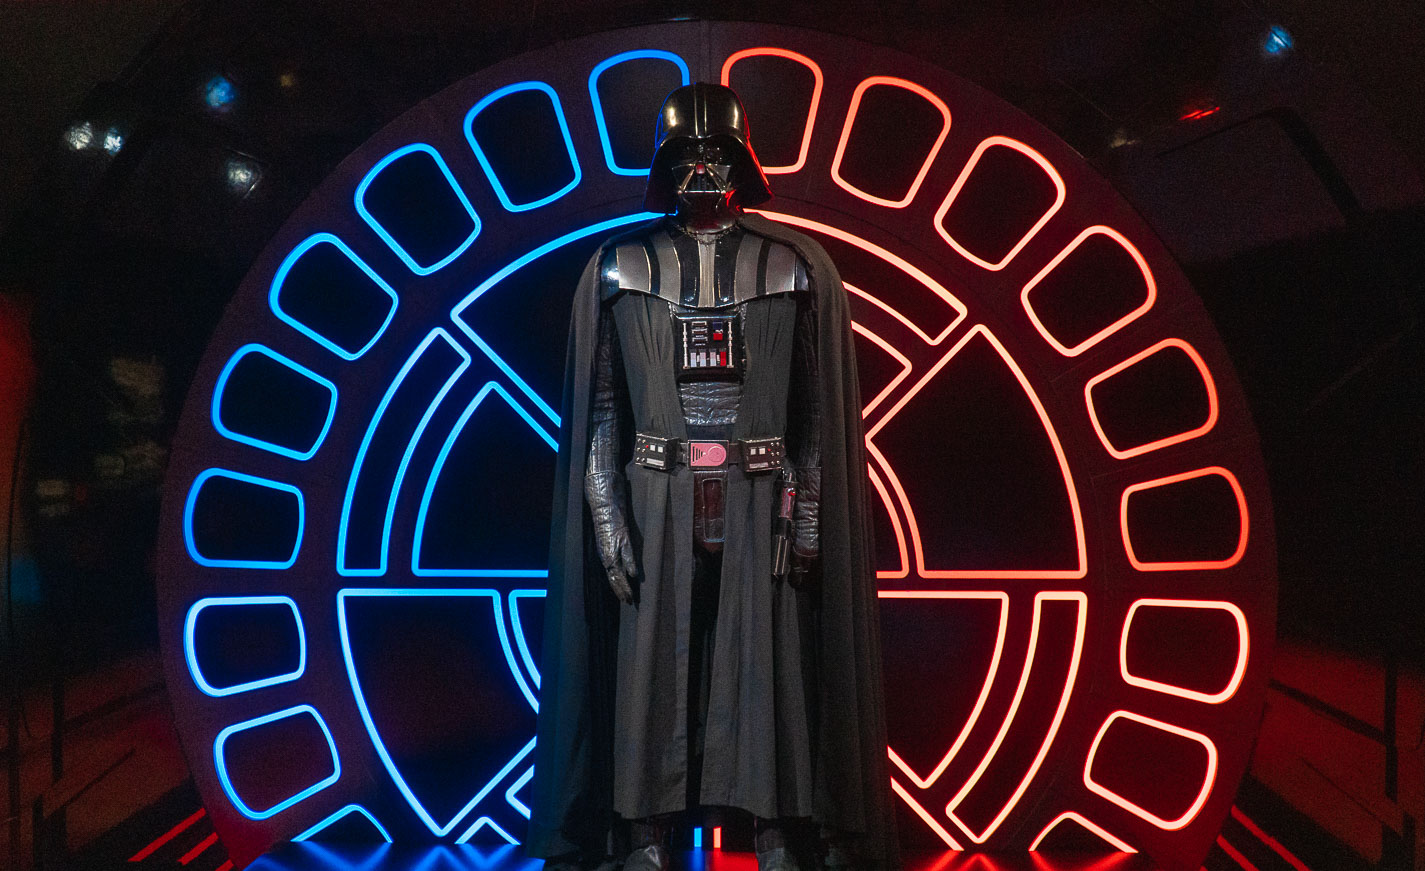 Ralph Mcquarrie Darth Vader Costume